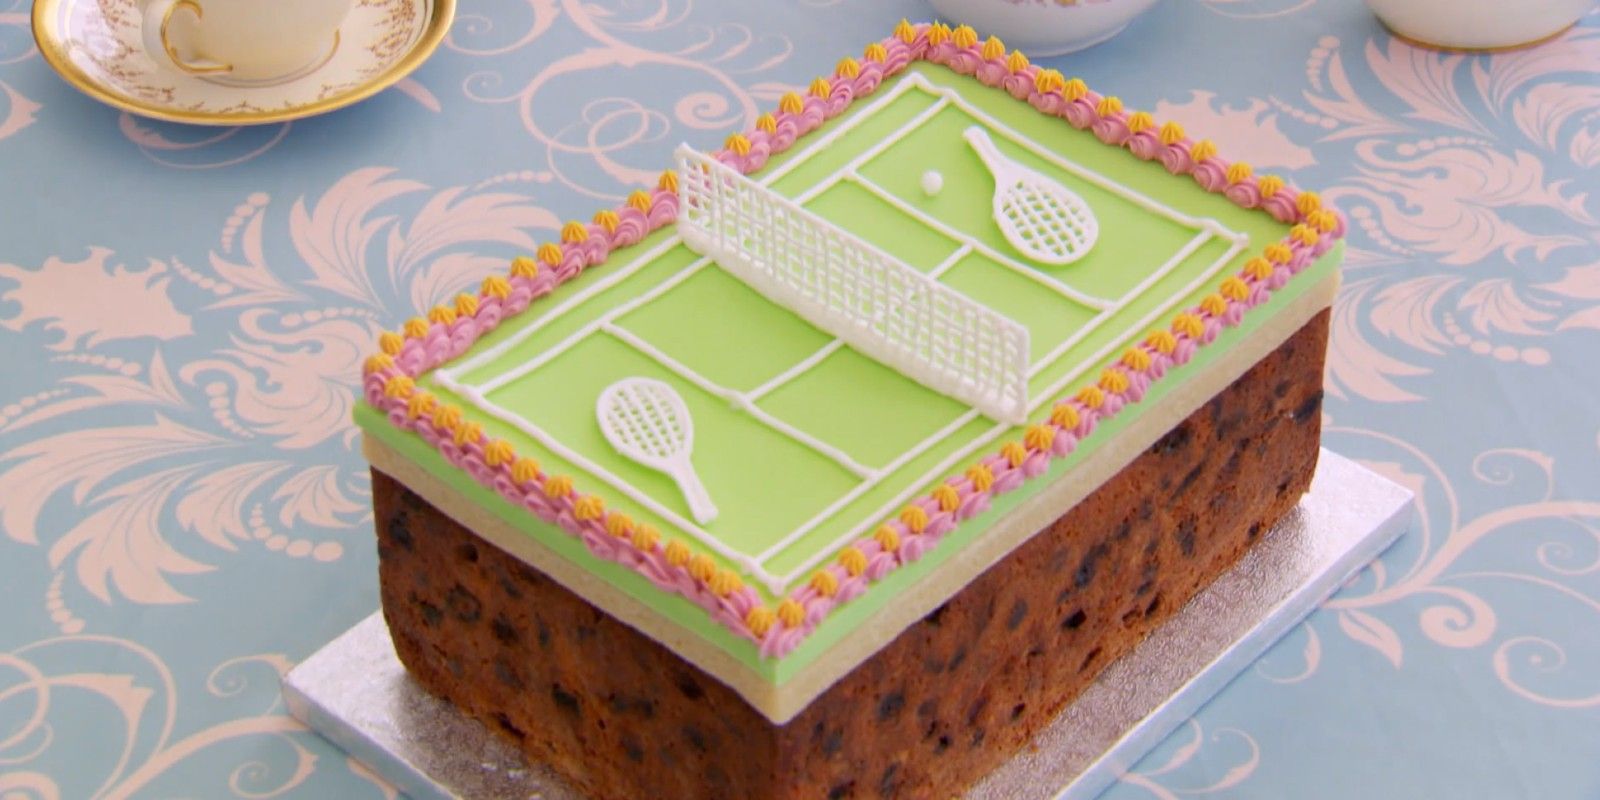 Great British Bake Off image showing a Tennis Cake